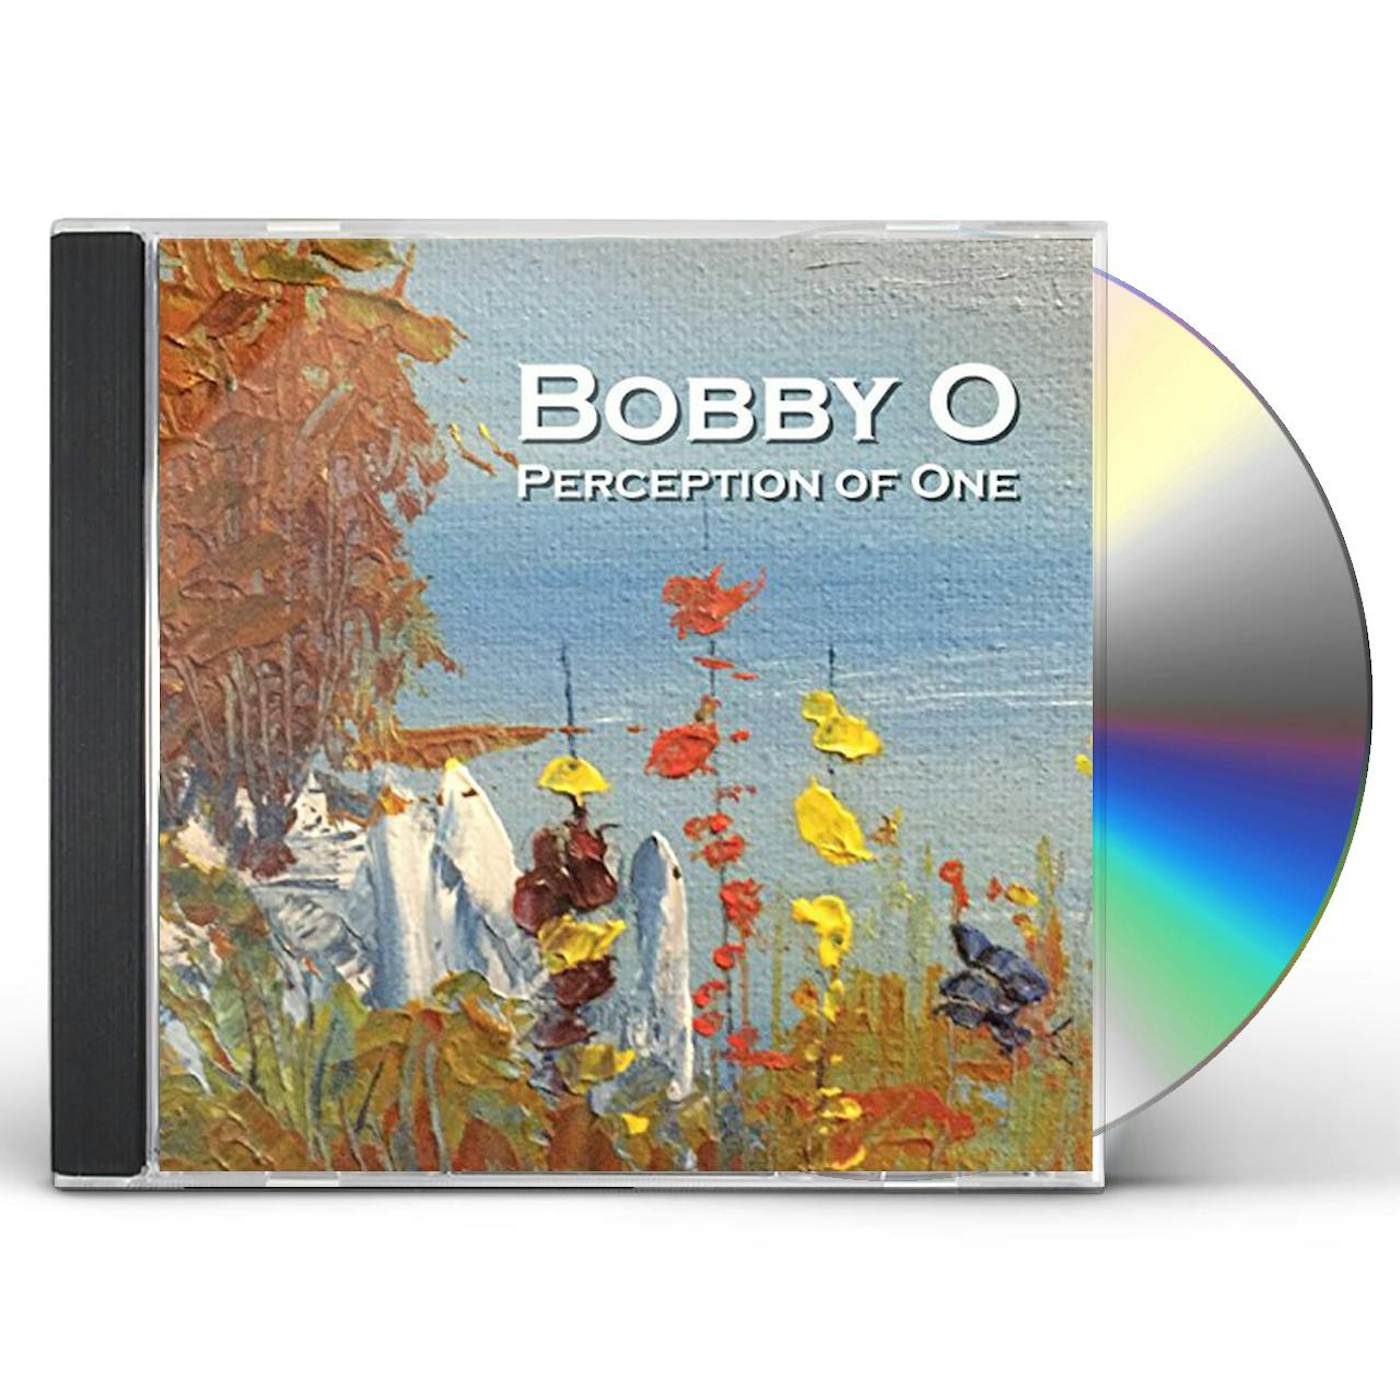 Bobby O PERCEPTION OF ONE CD